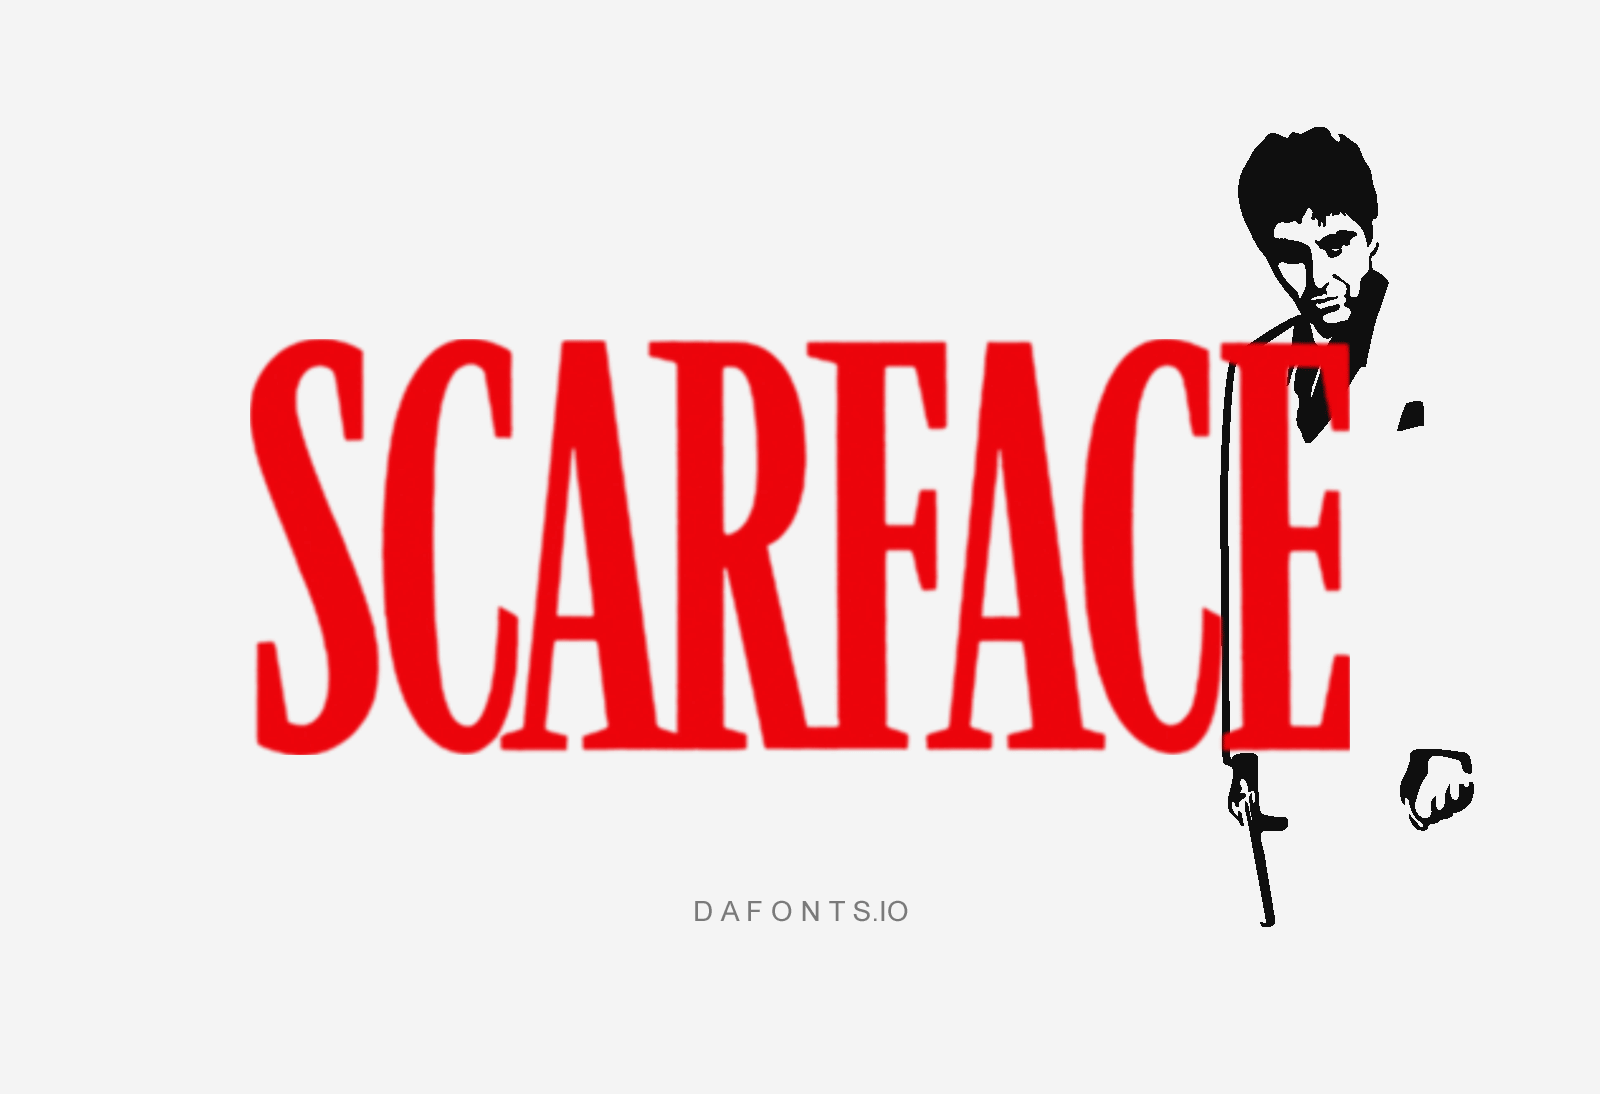 Scarface Font